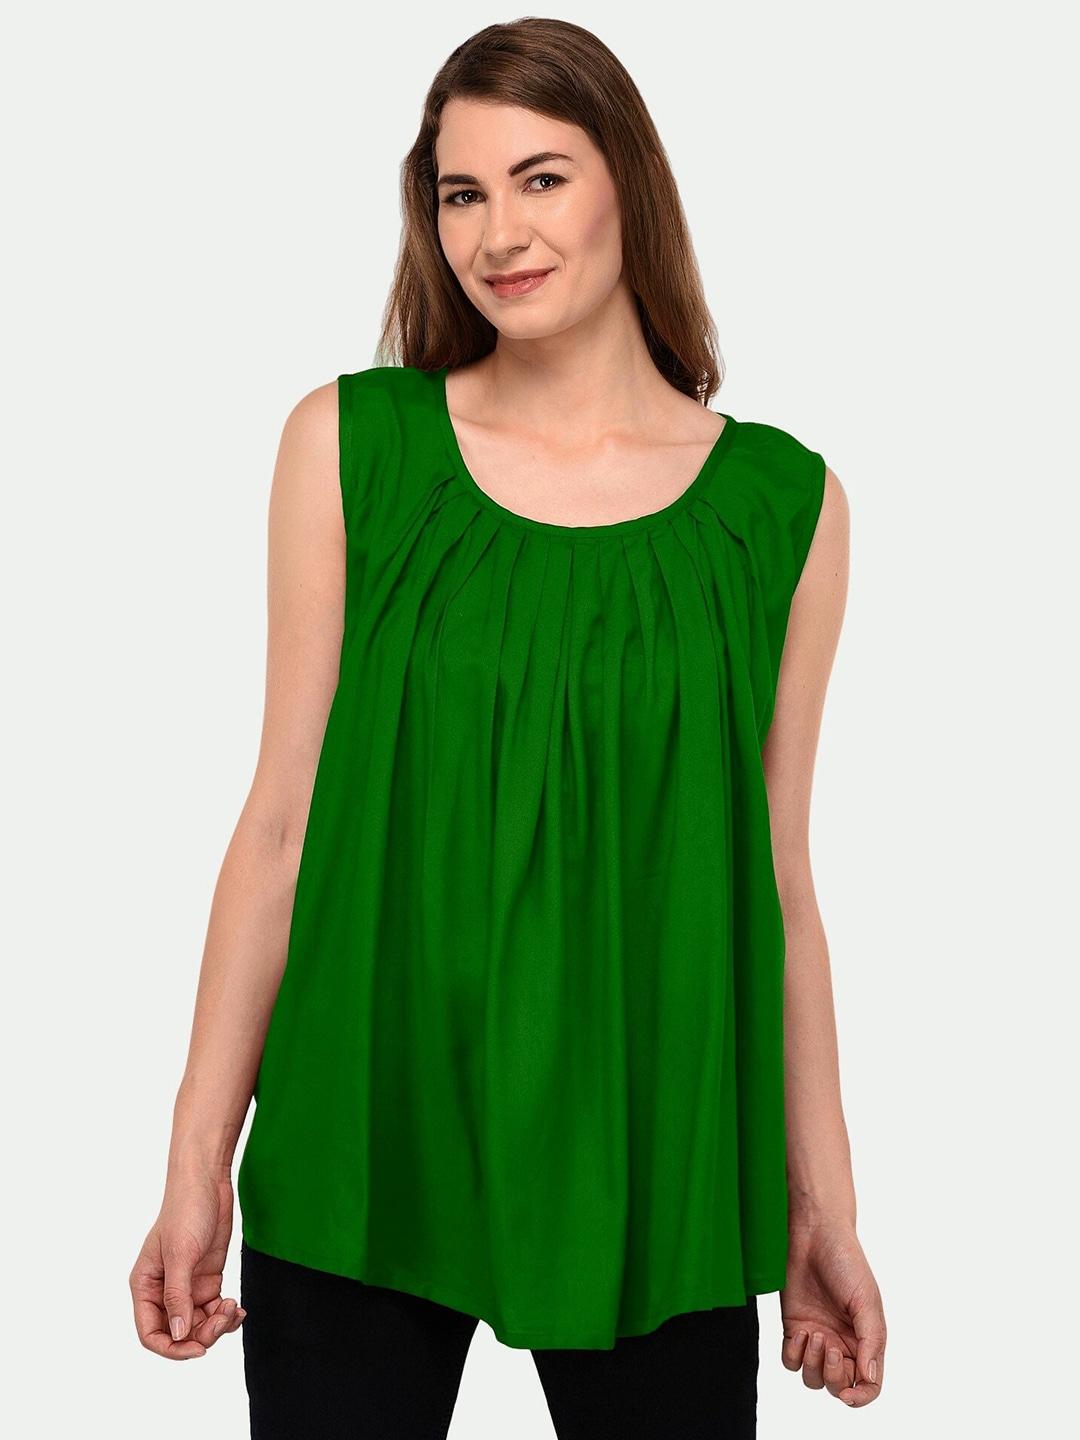 PATRORNA Women Green Solid Round Neck Sleeveless Cotton Blend Top